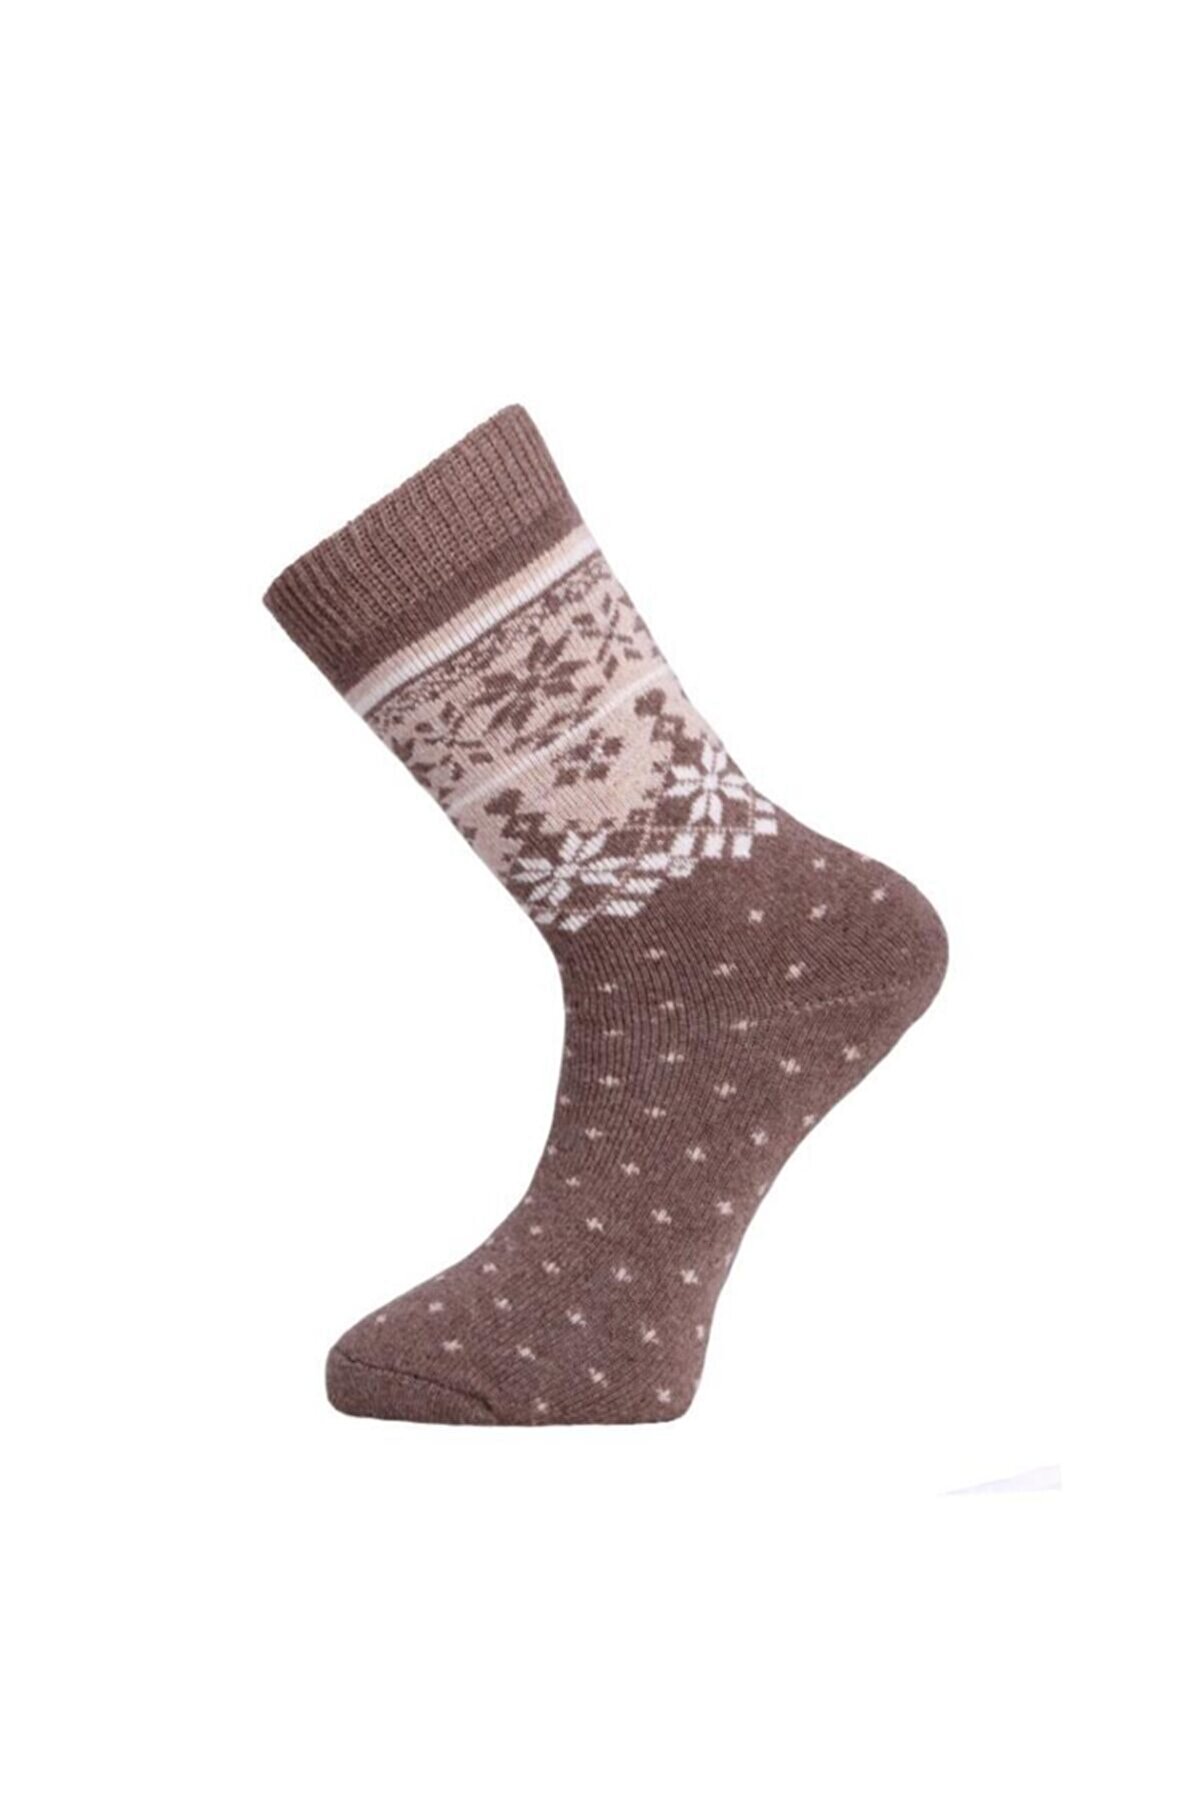 Panthzer Casual Wool Erkek Çorap Bej